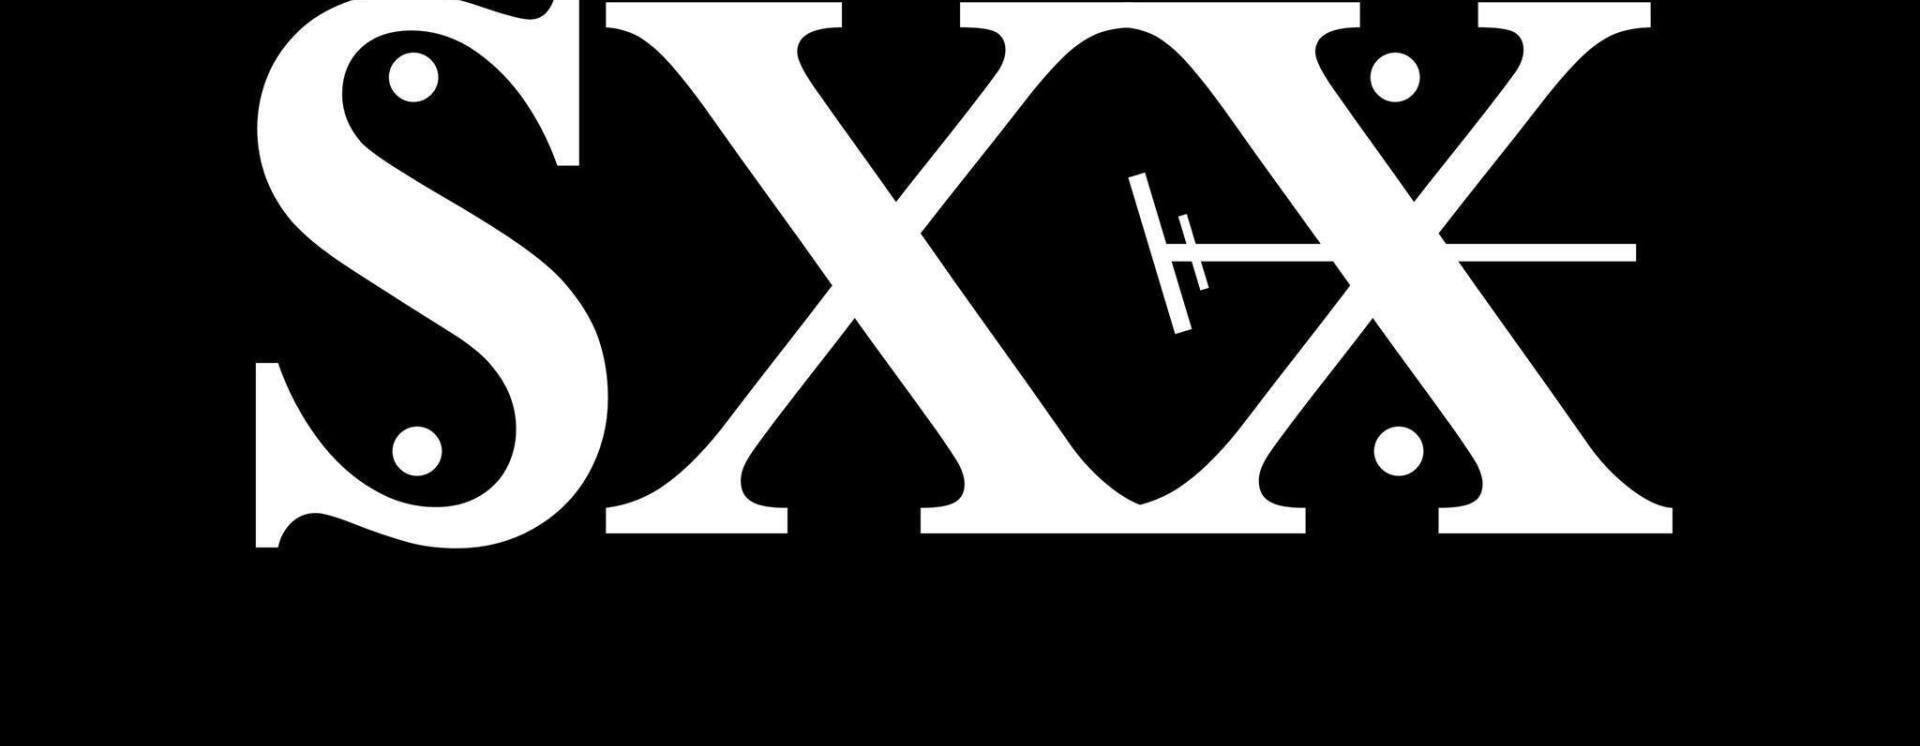 Use Ssxx Videos - SXX Videos | ReverbNation